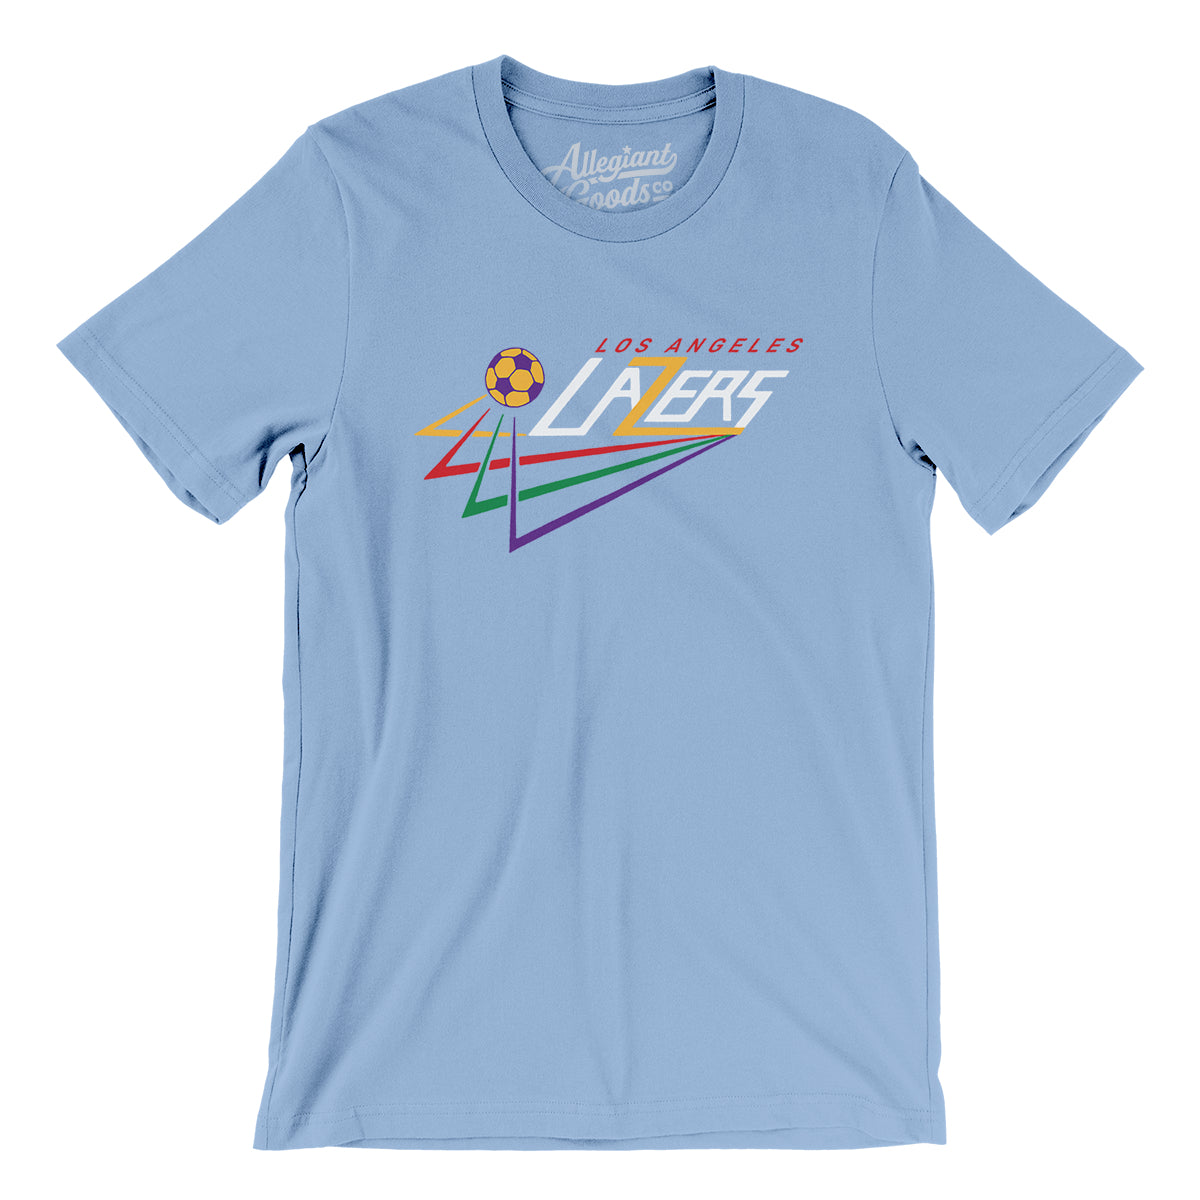 Los Angeles Football Memorabilia Essential T-Shirt for Sale by BadassDude